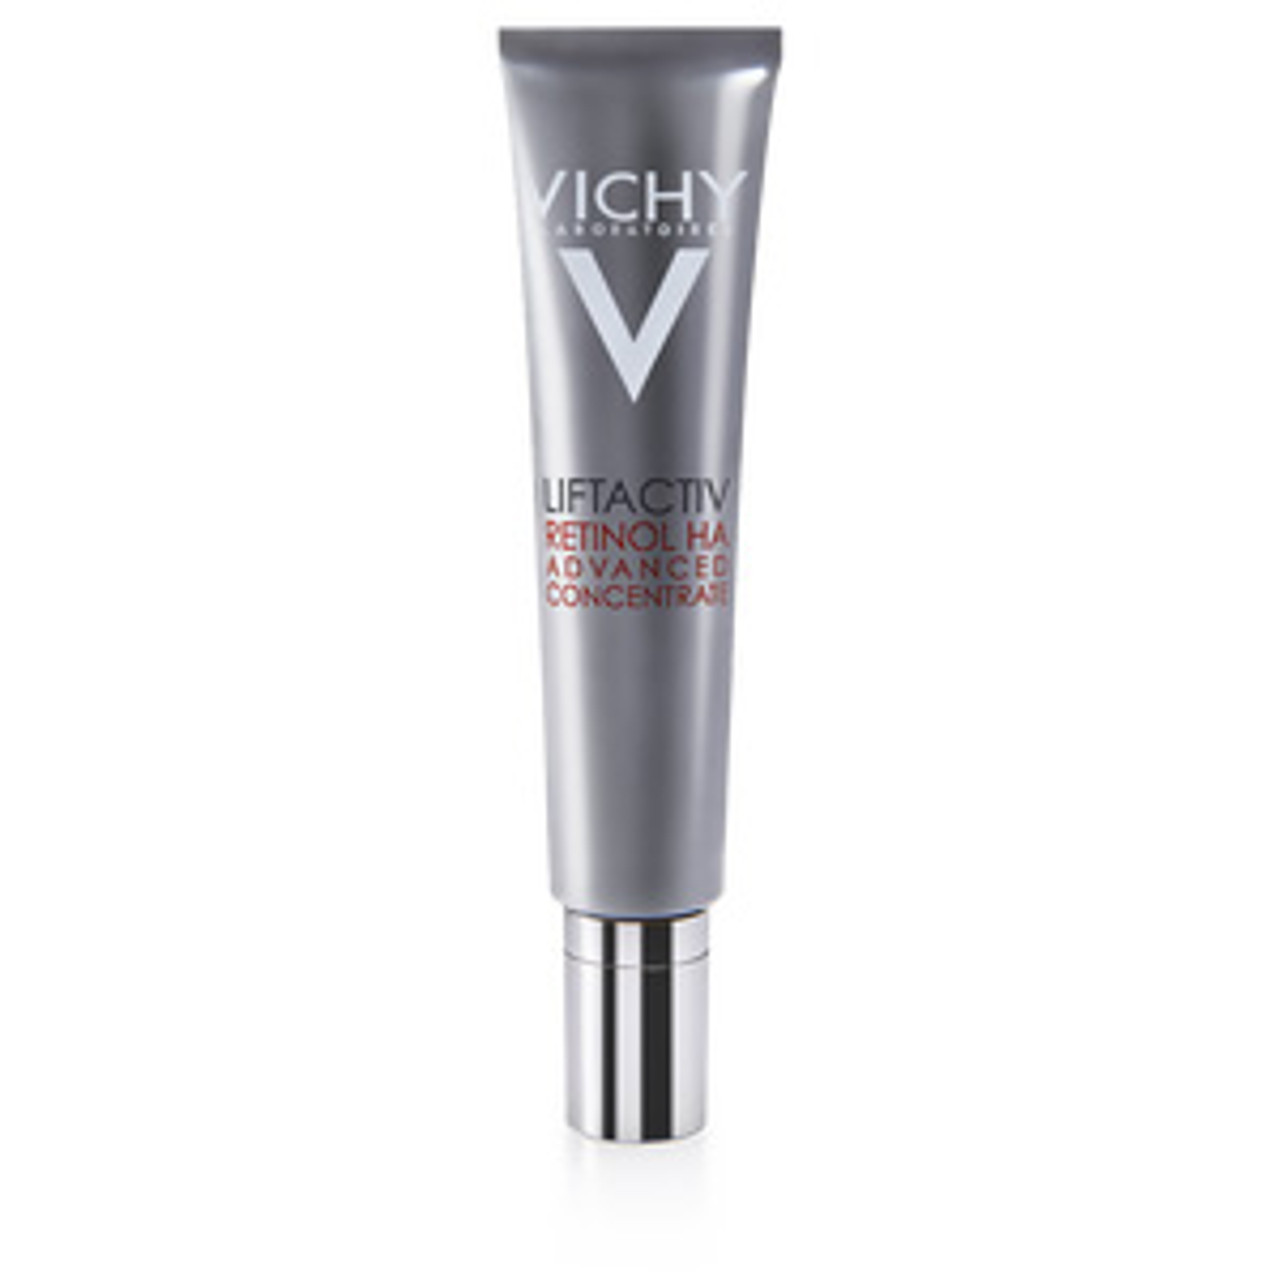 Vichy LiftActiv Retinol HA Concentrate - 1 oz (M58916) ® on Sale at $49.5 - Free Samples & Reward